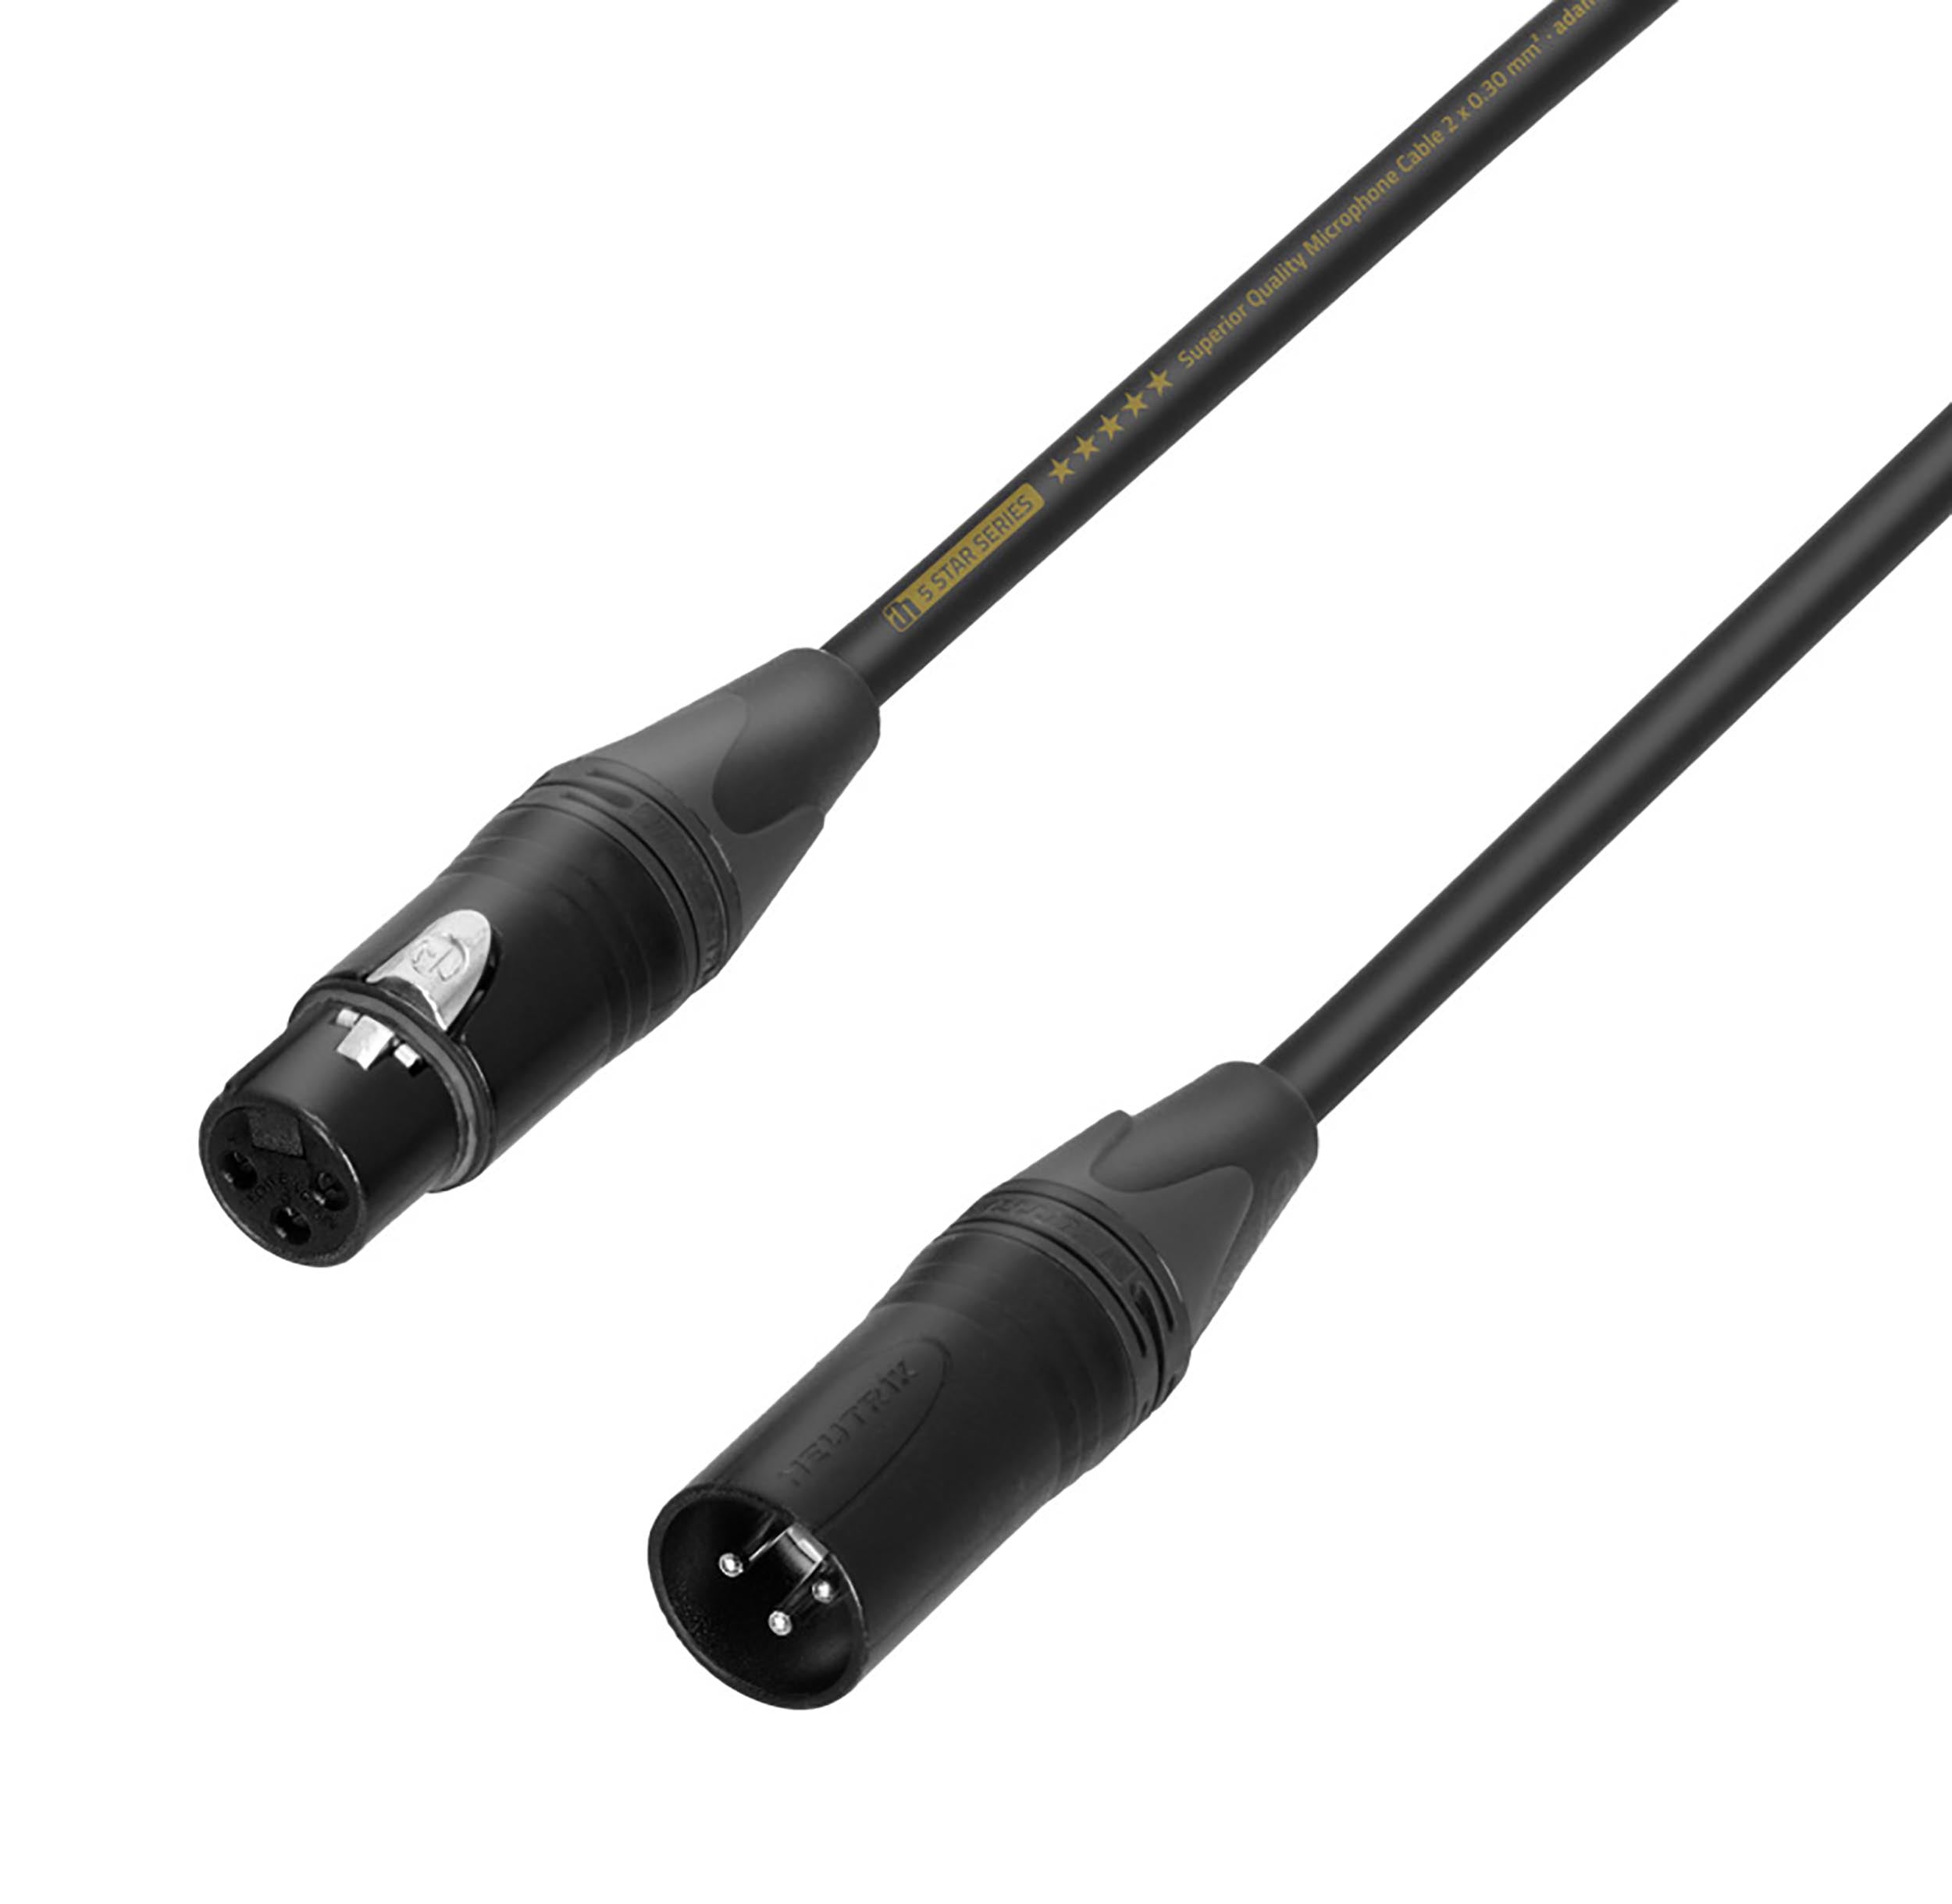 Adam Hall Cables 5 STAR MMF 0300, Microphone Cable Neutrik XLR Female to XLR Male - 3 m by Adam Hall